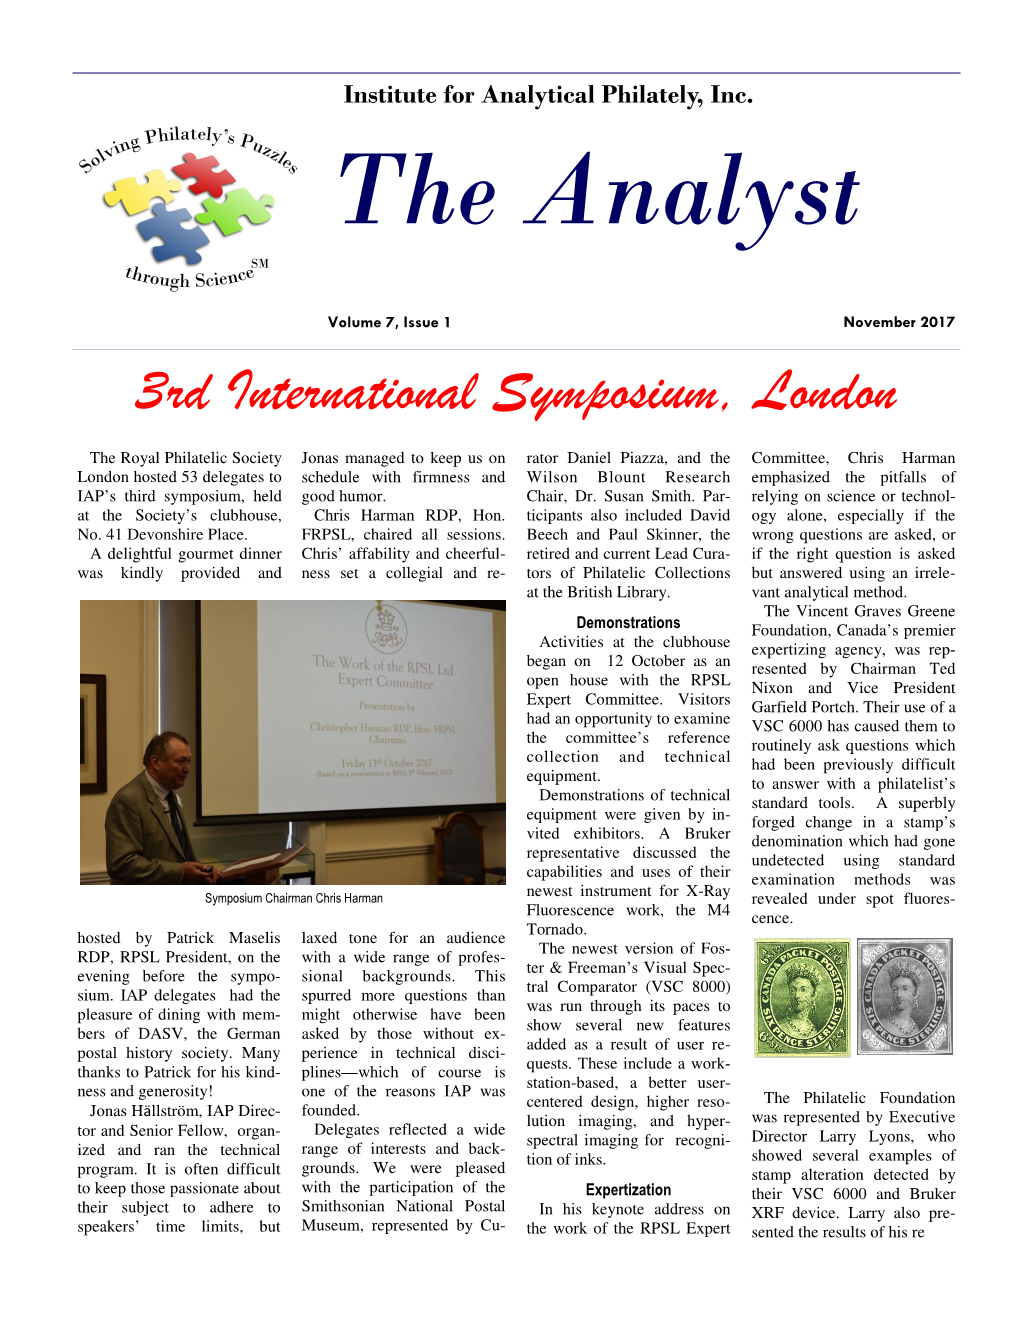 The Analyst Volume 7, Issue 1, November 2017